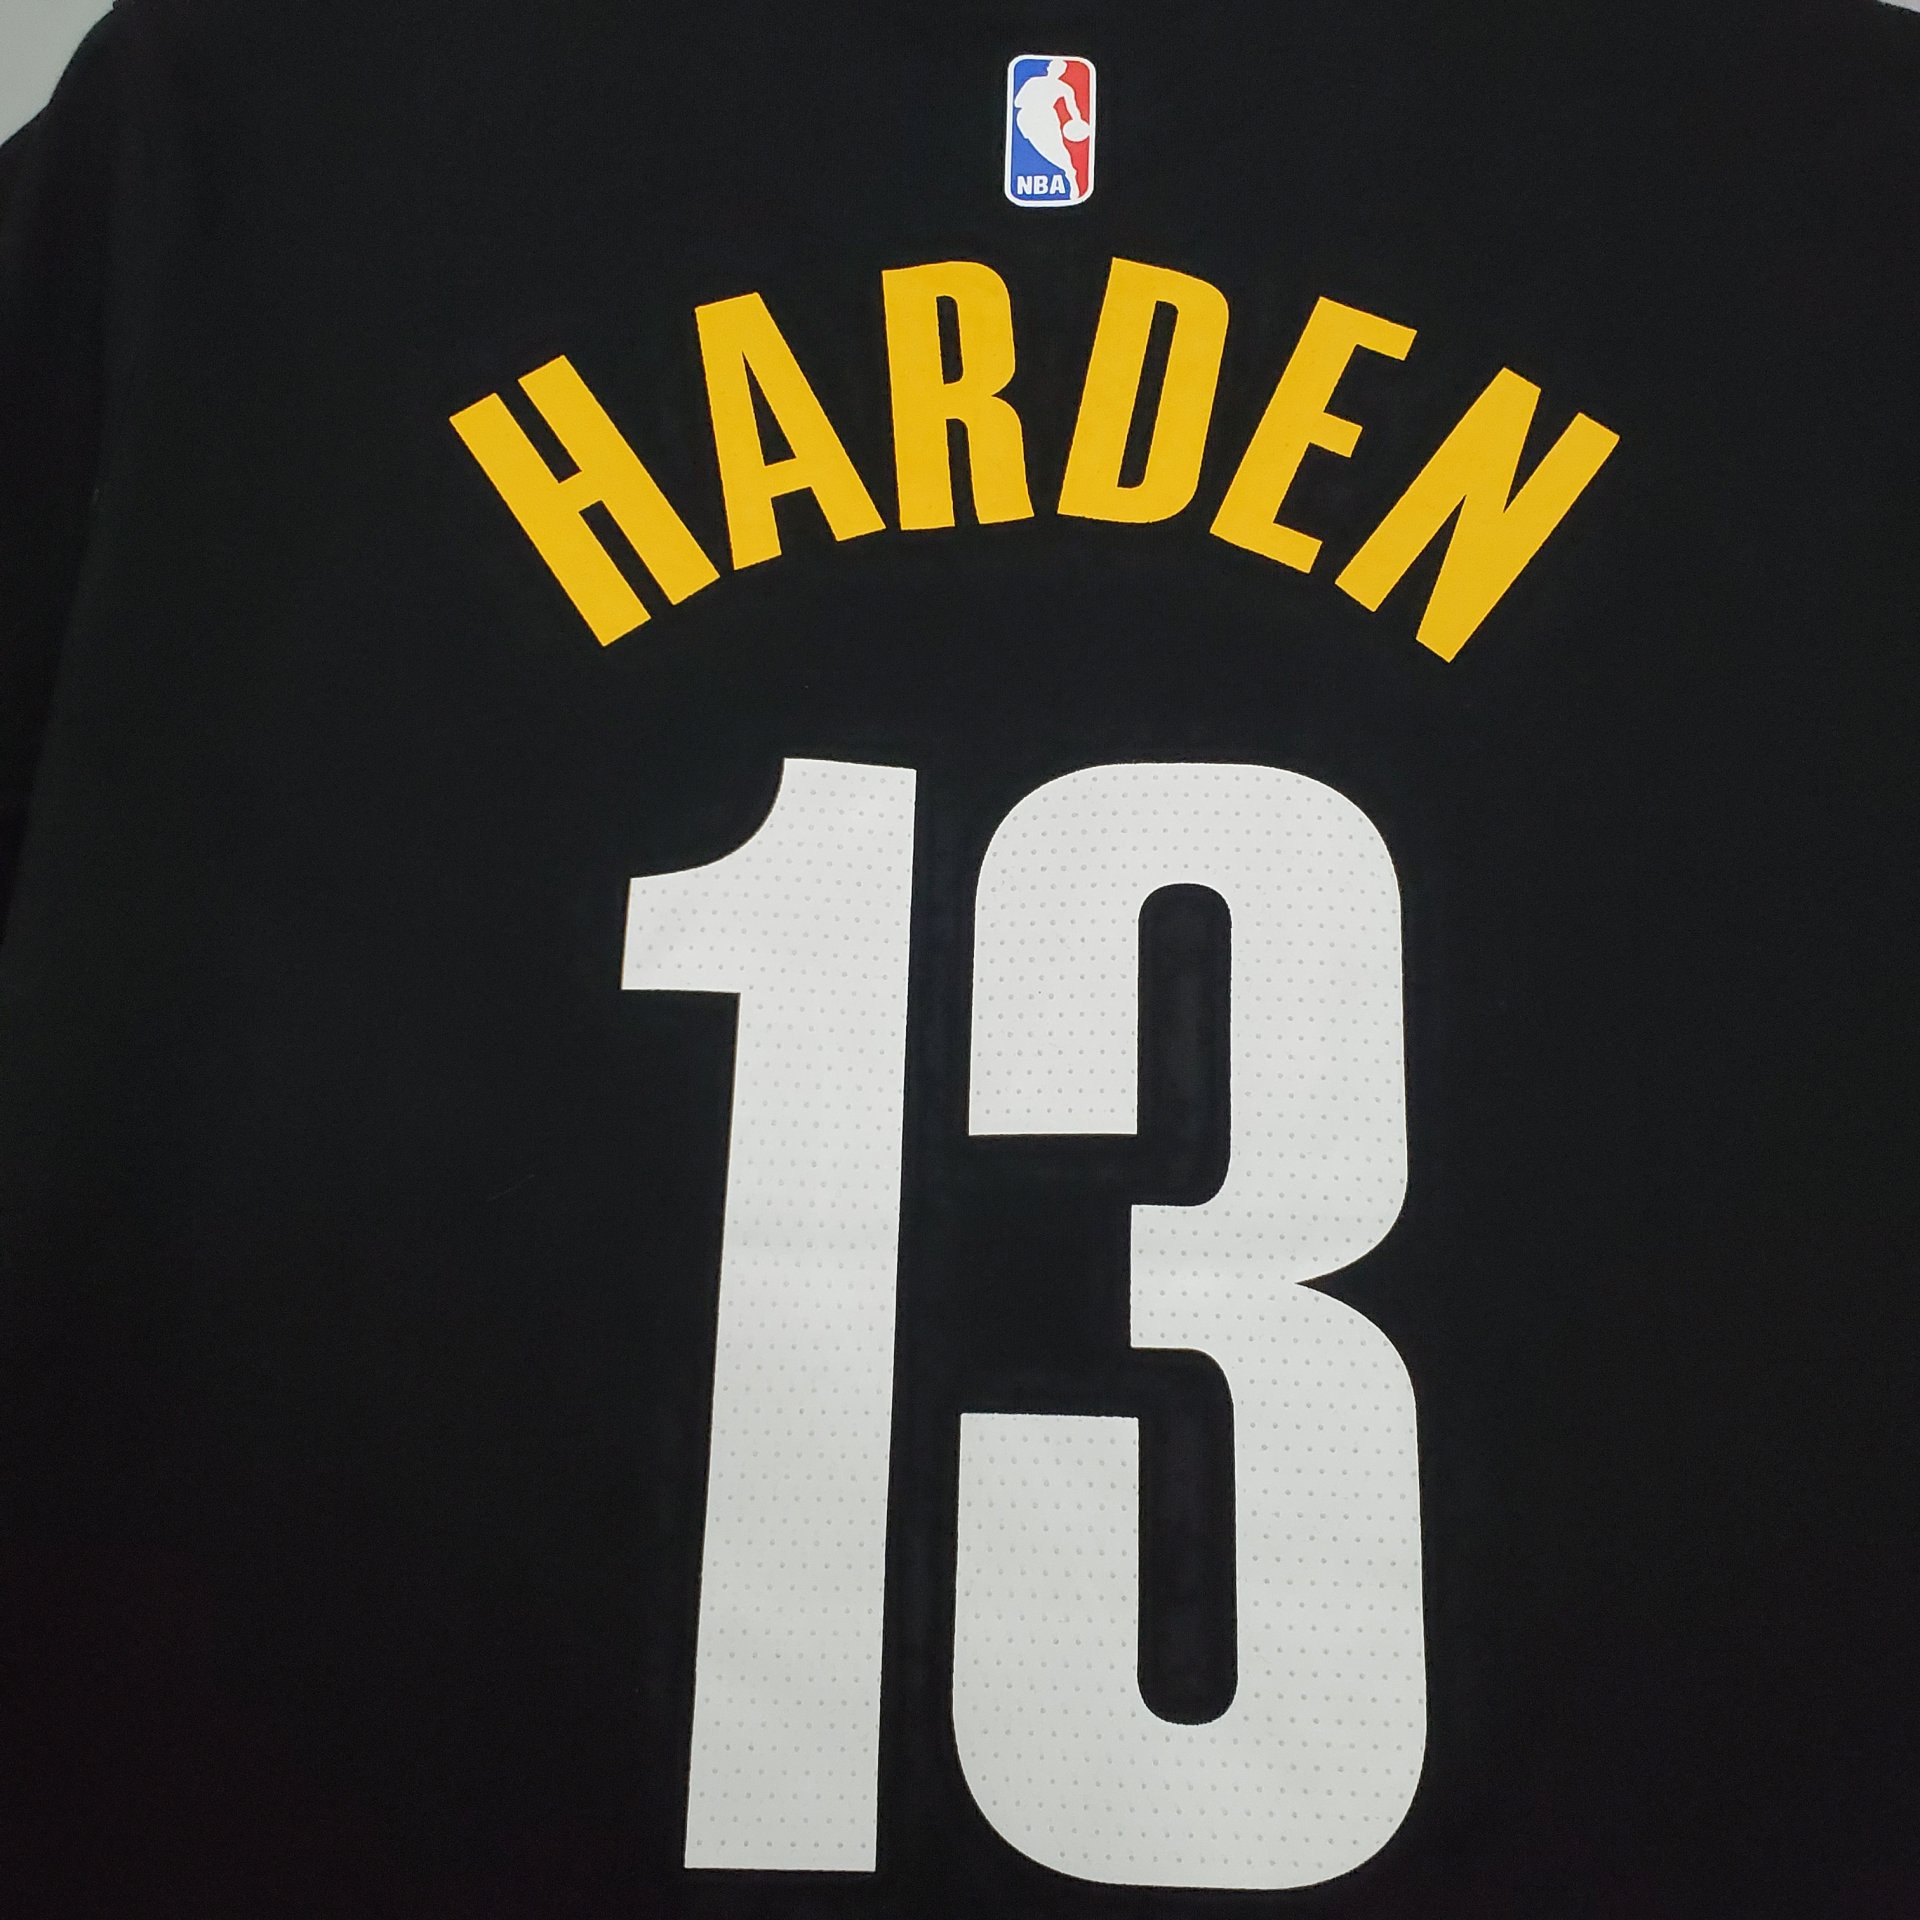 James Harden Brooklyn Nets 20/21 City Edition Authentic Jersey - Rare  Basketball Jerseys